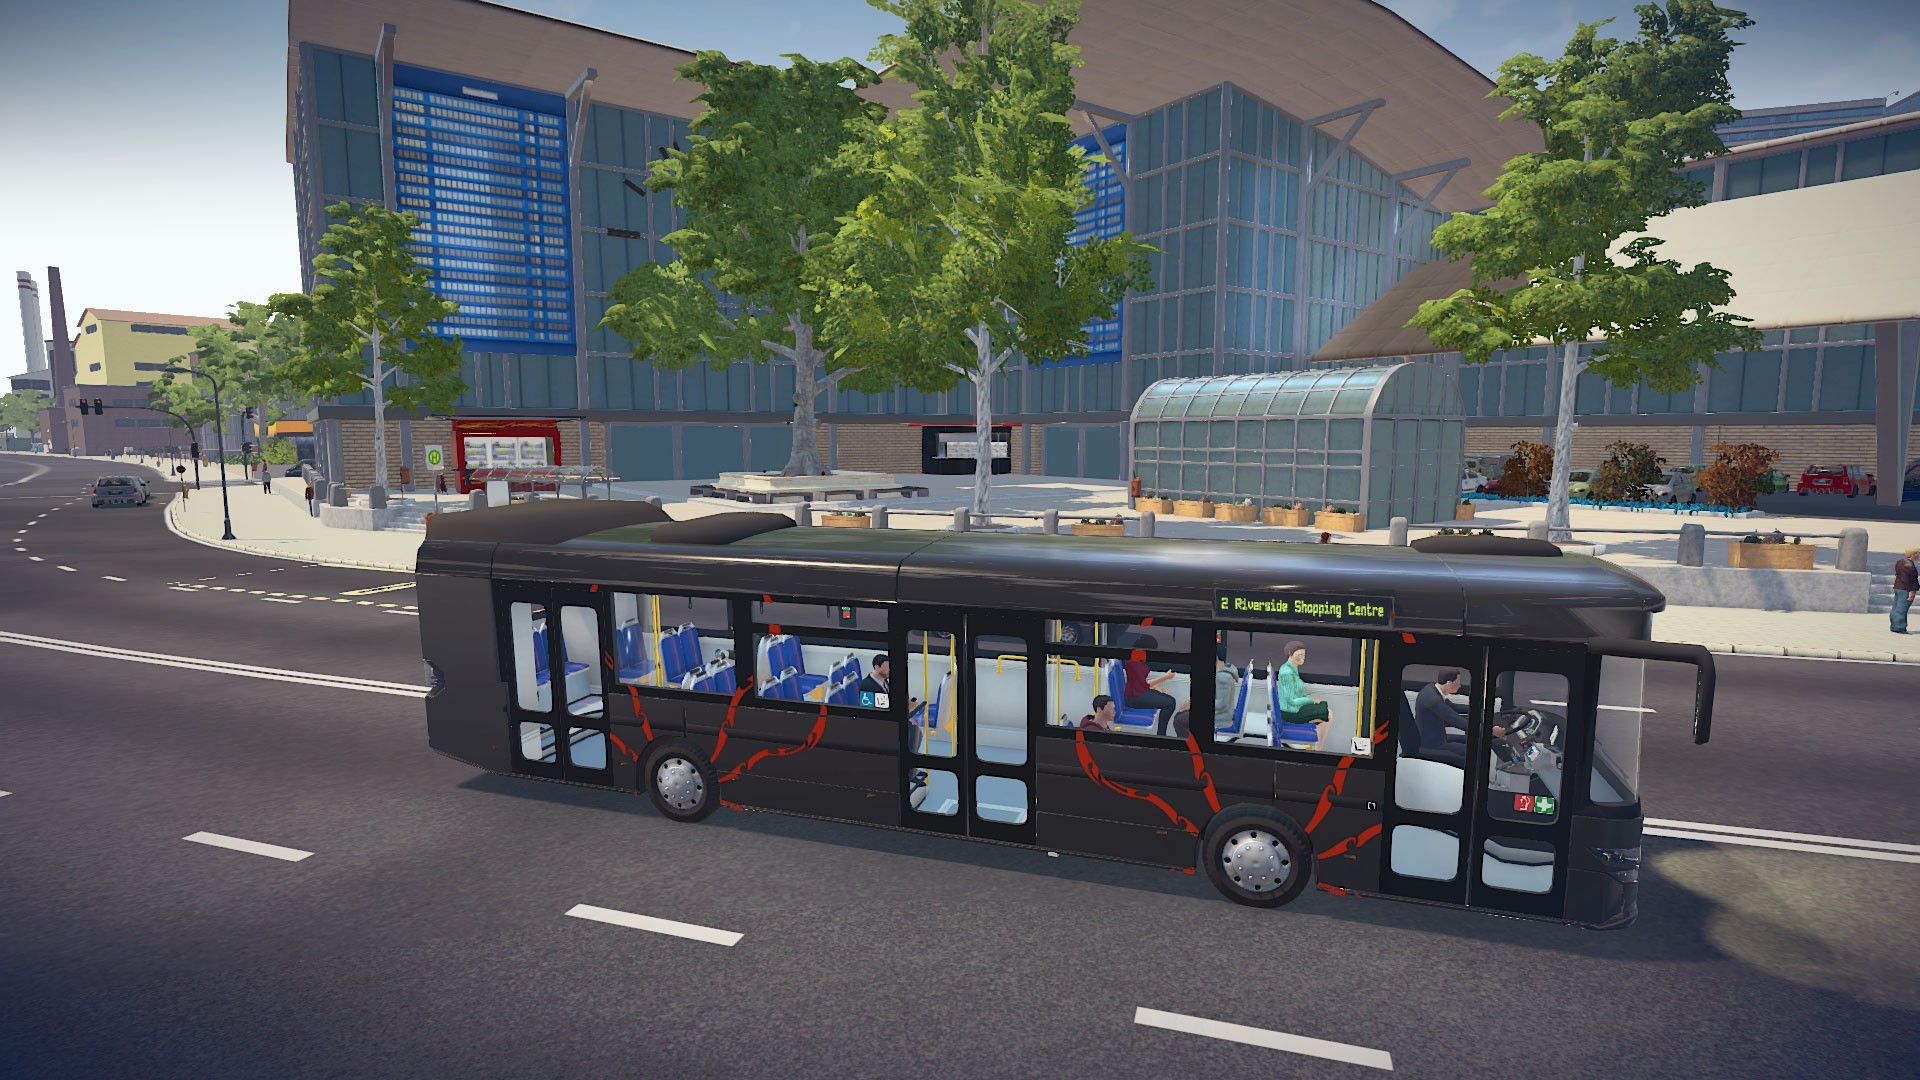 bus simulator 16 gold edition gameplay